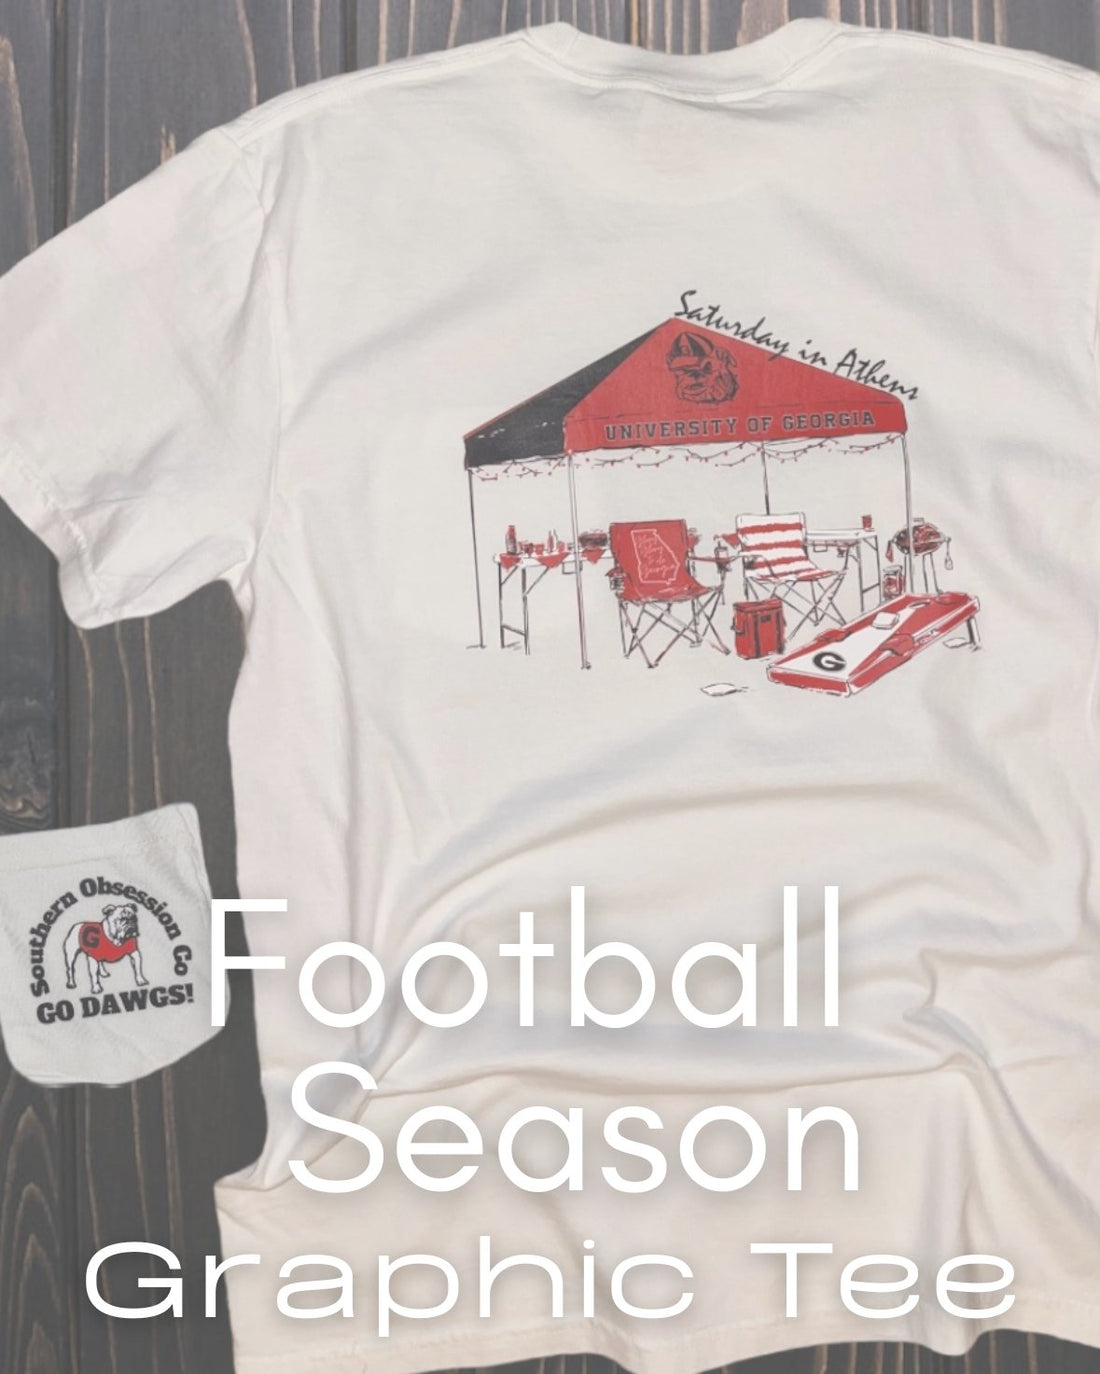  Football Season Graphic Tee